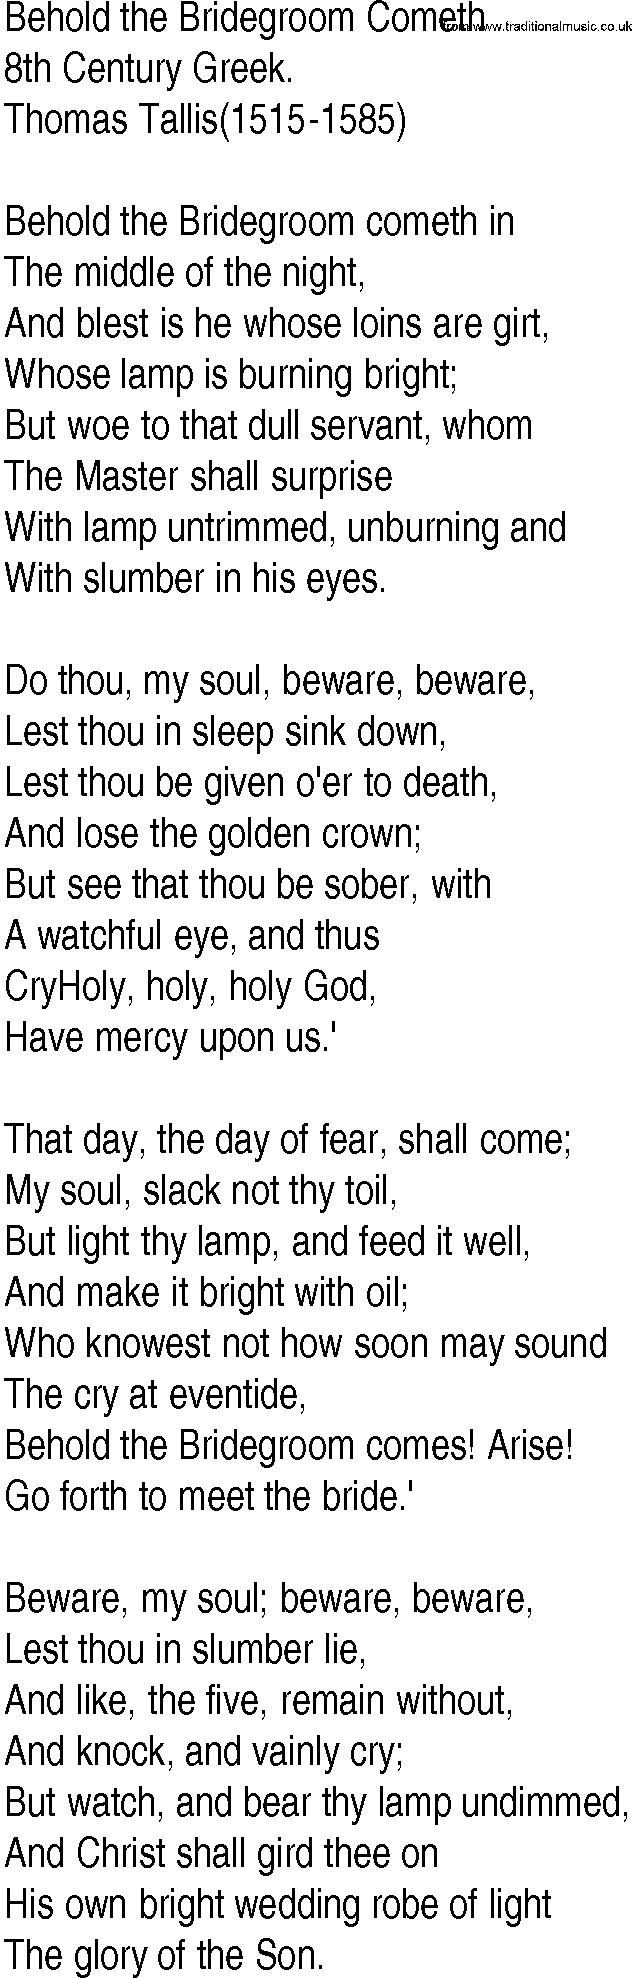 Hymn and Gospel Song: Behold the Bridegroom Cometh by Greek lyrics